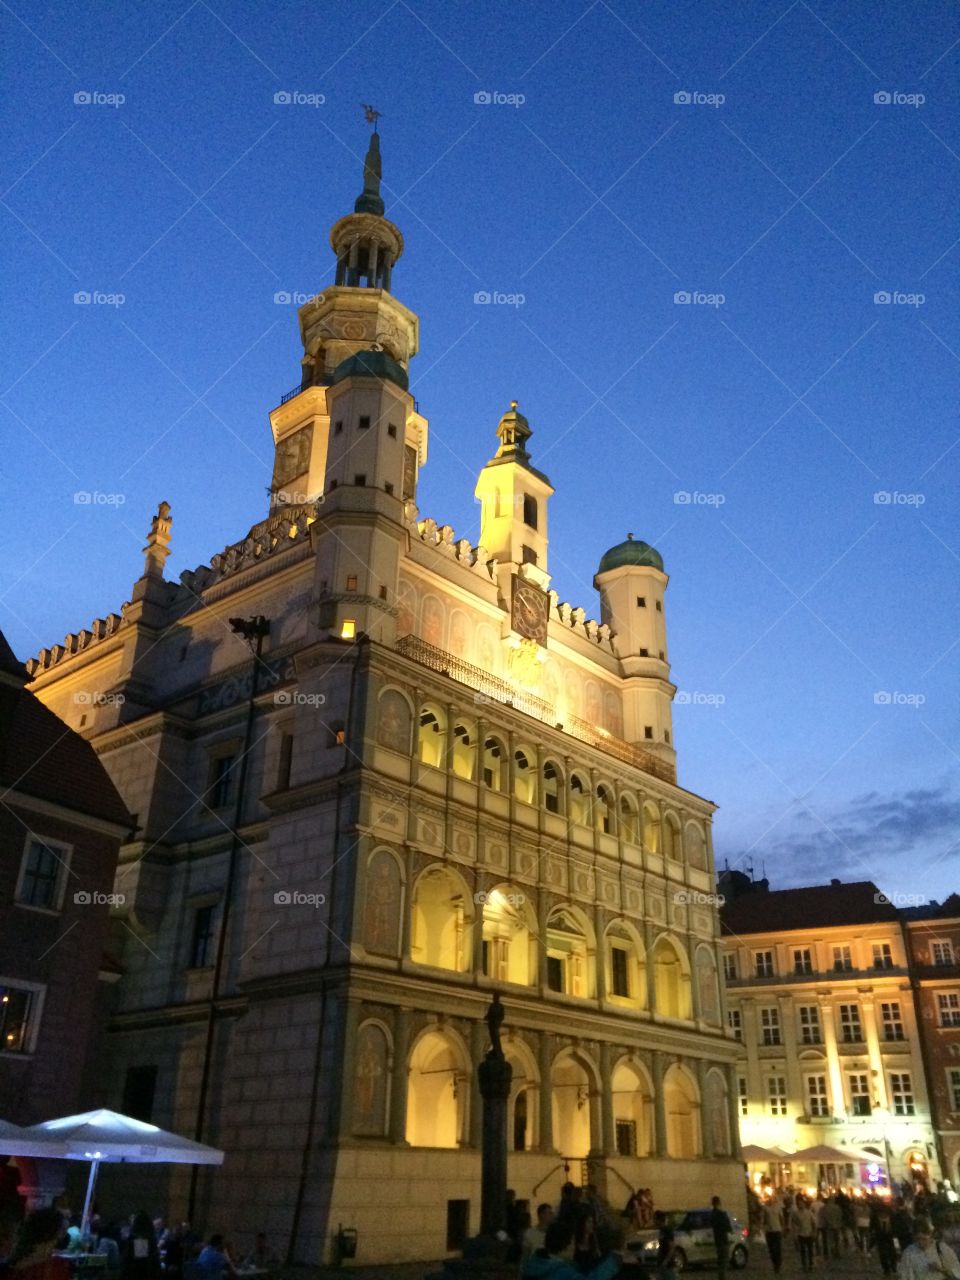 Poznan, Poland, Town Hall at night